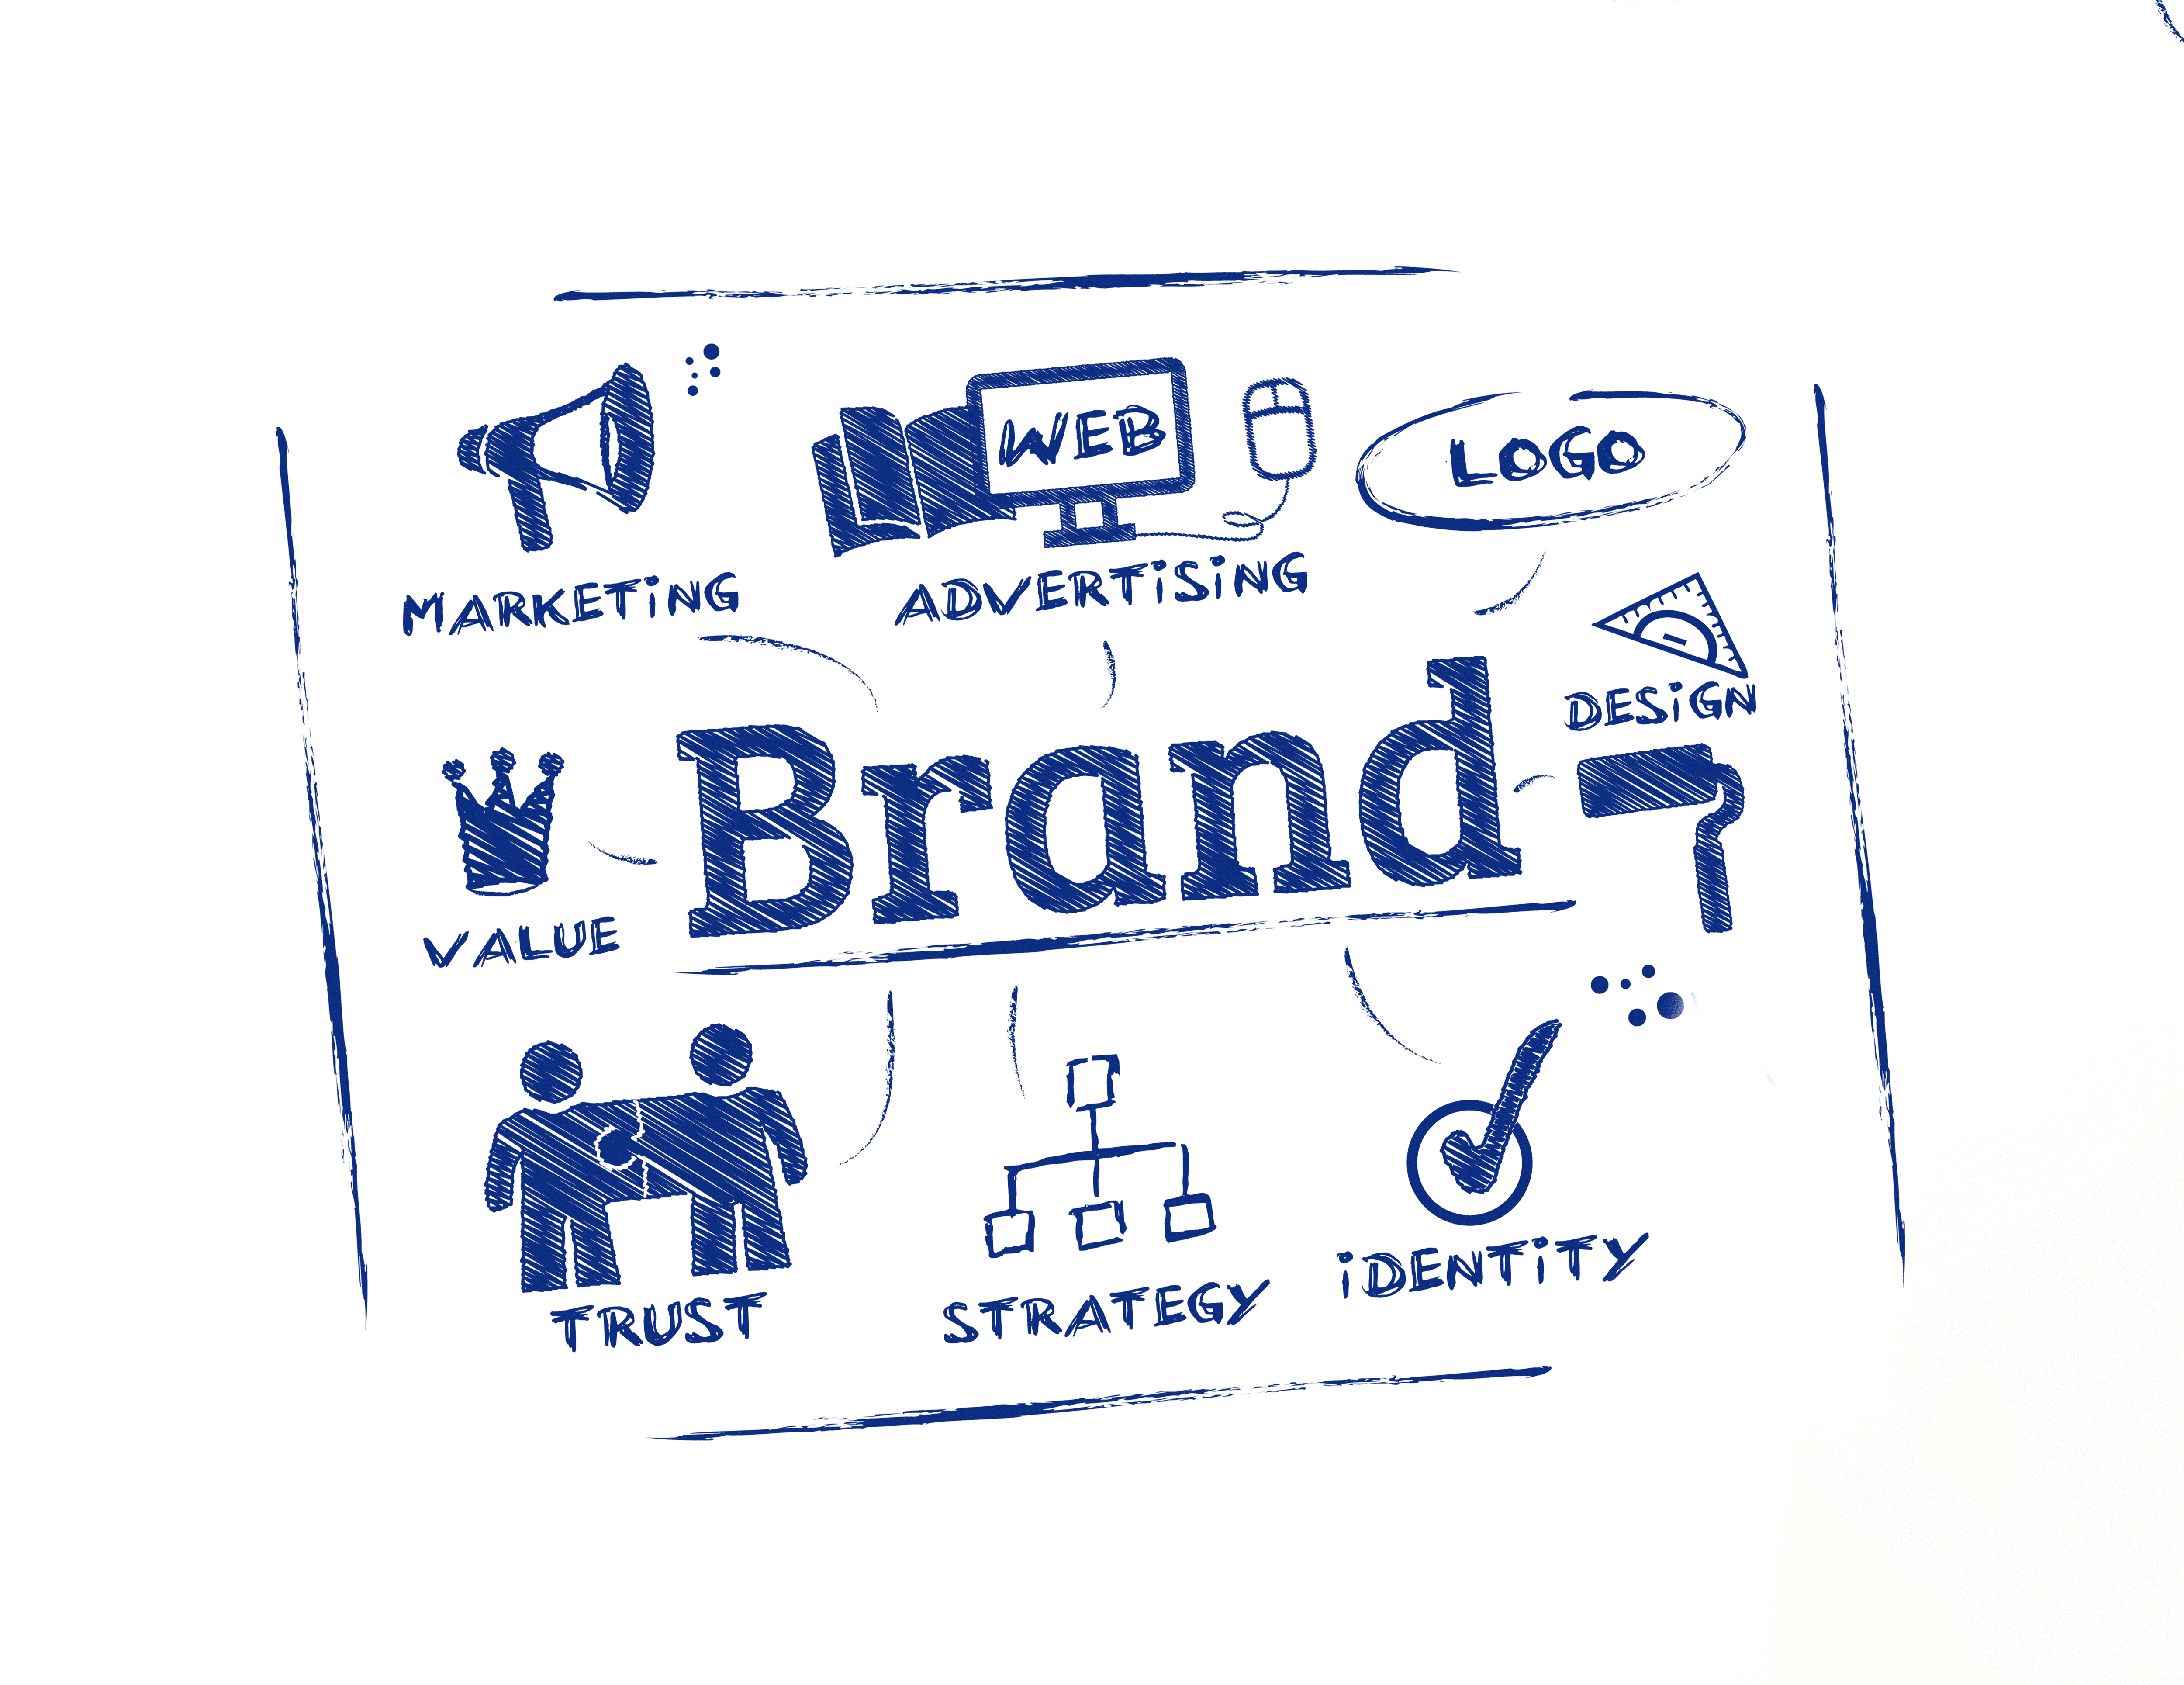 Turn brand management into marketing success!